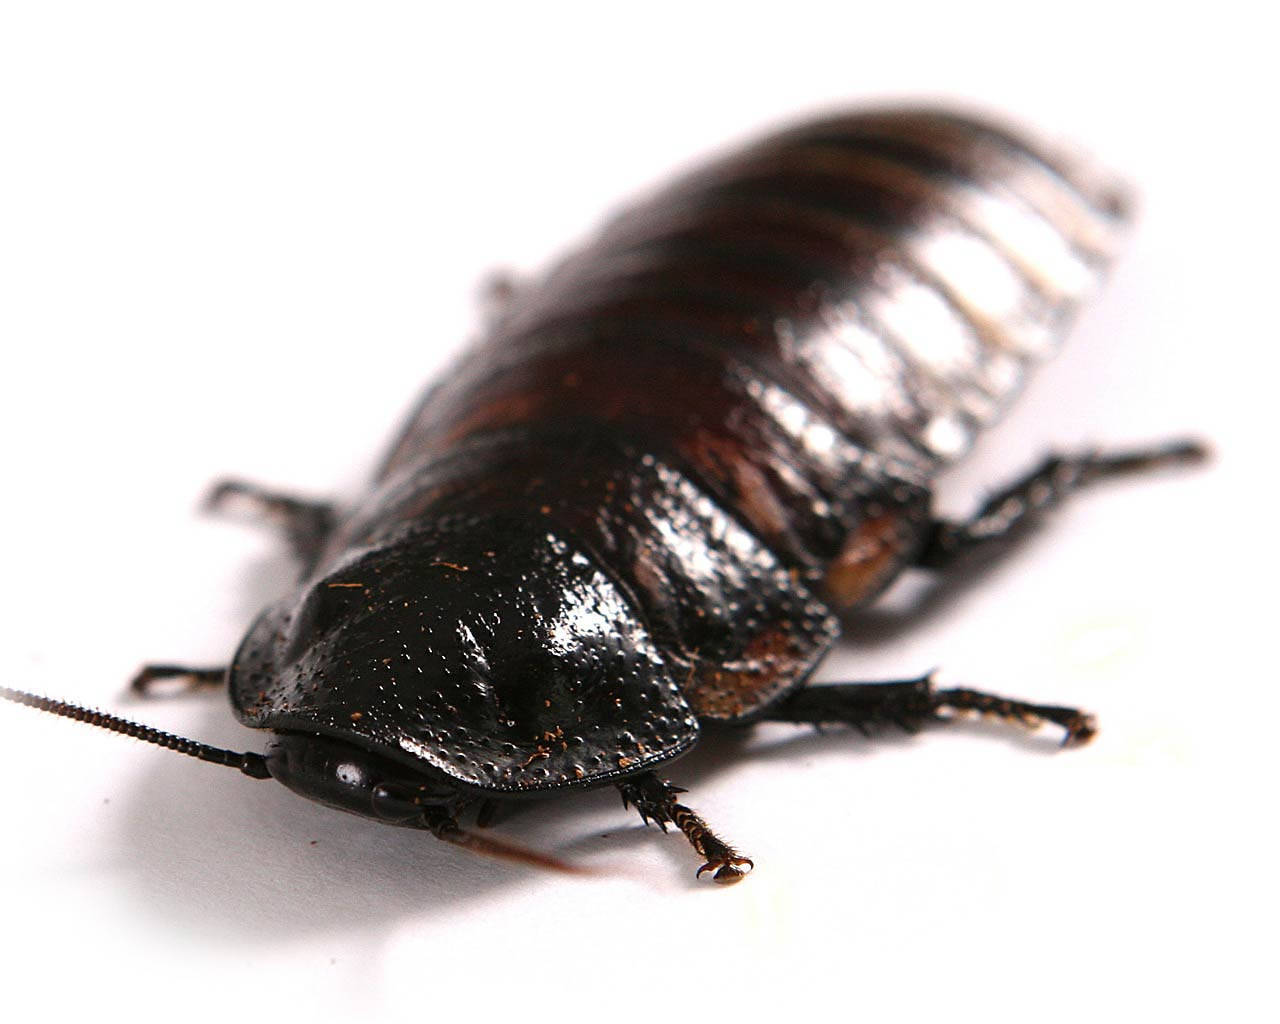 Caption: Close-up View Of A Big Black Oriental Cockroach